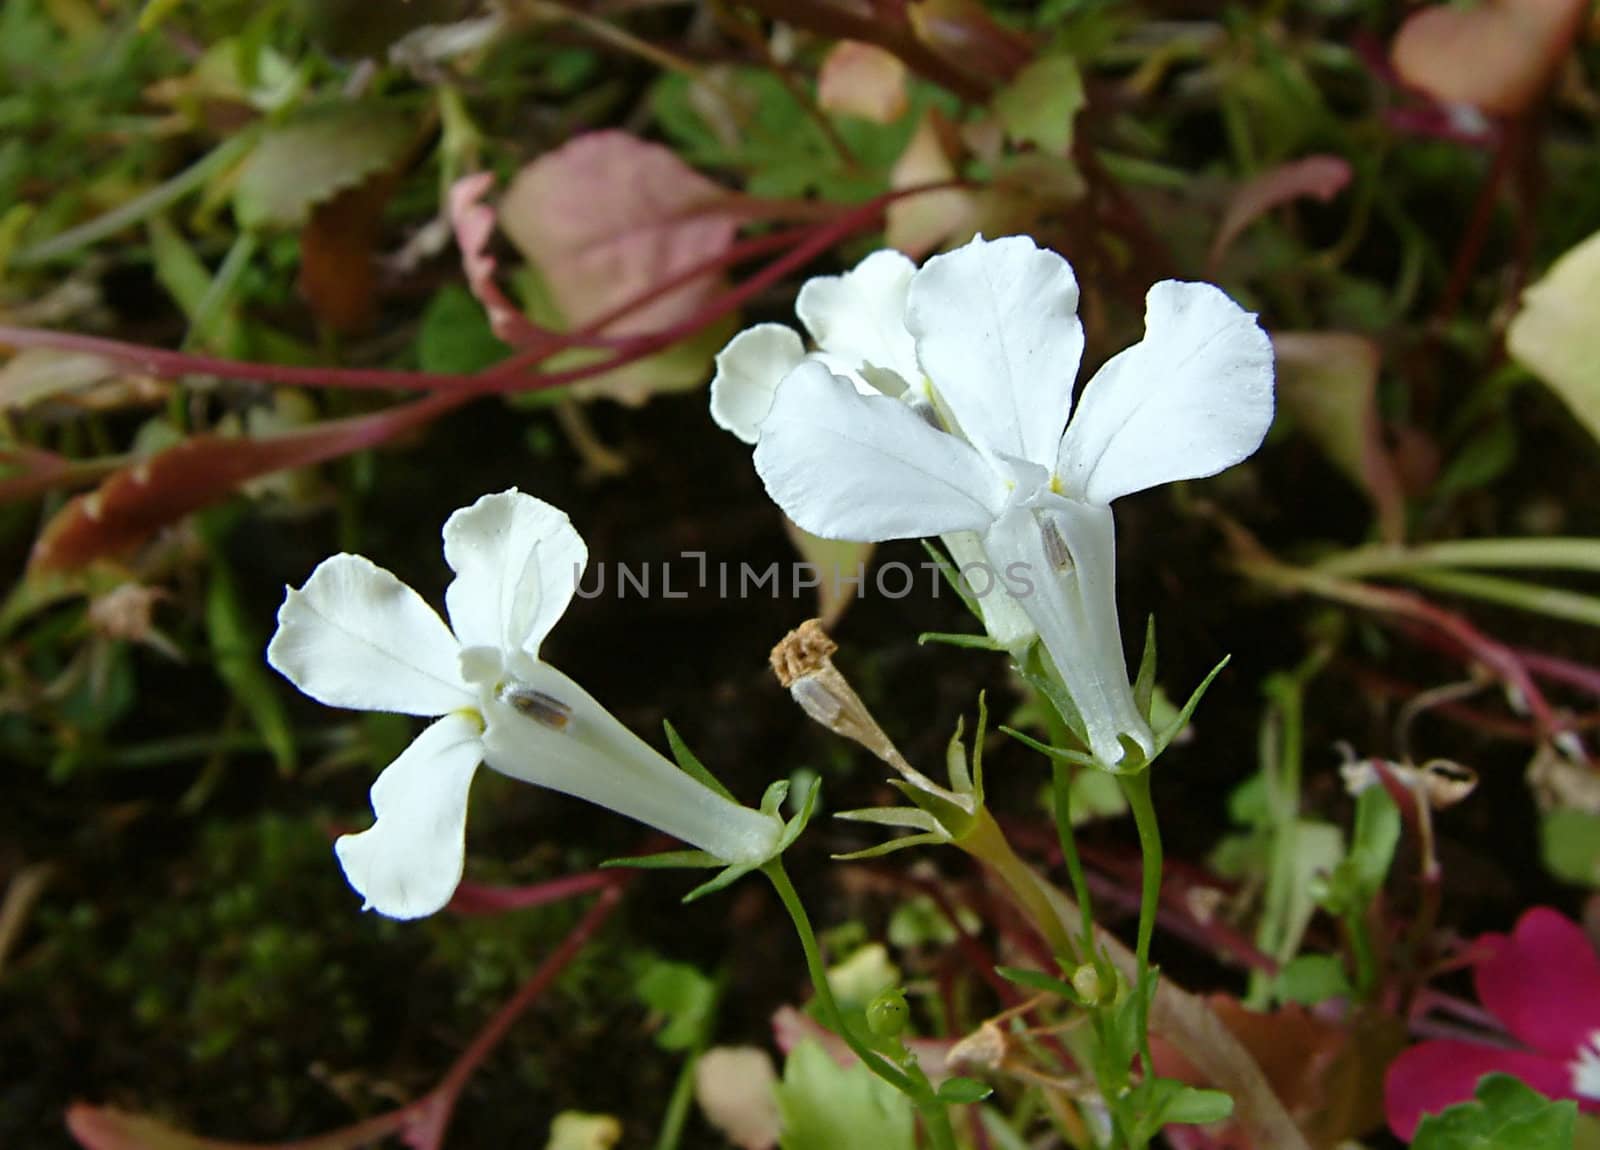 small white delicate flowers of the lobelia family